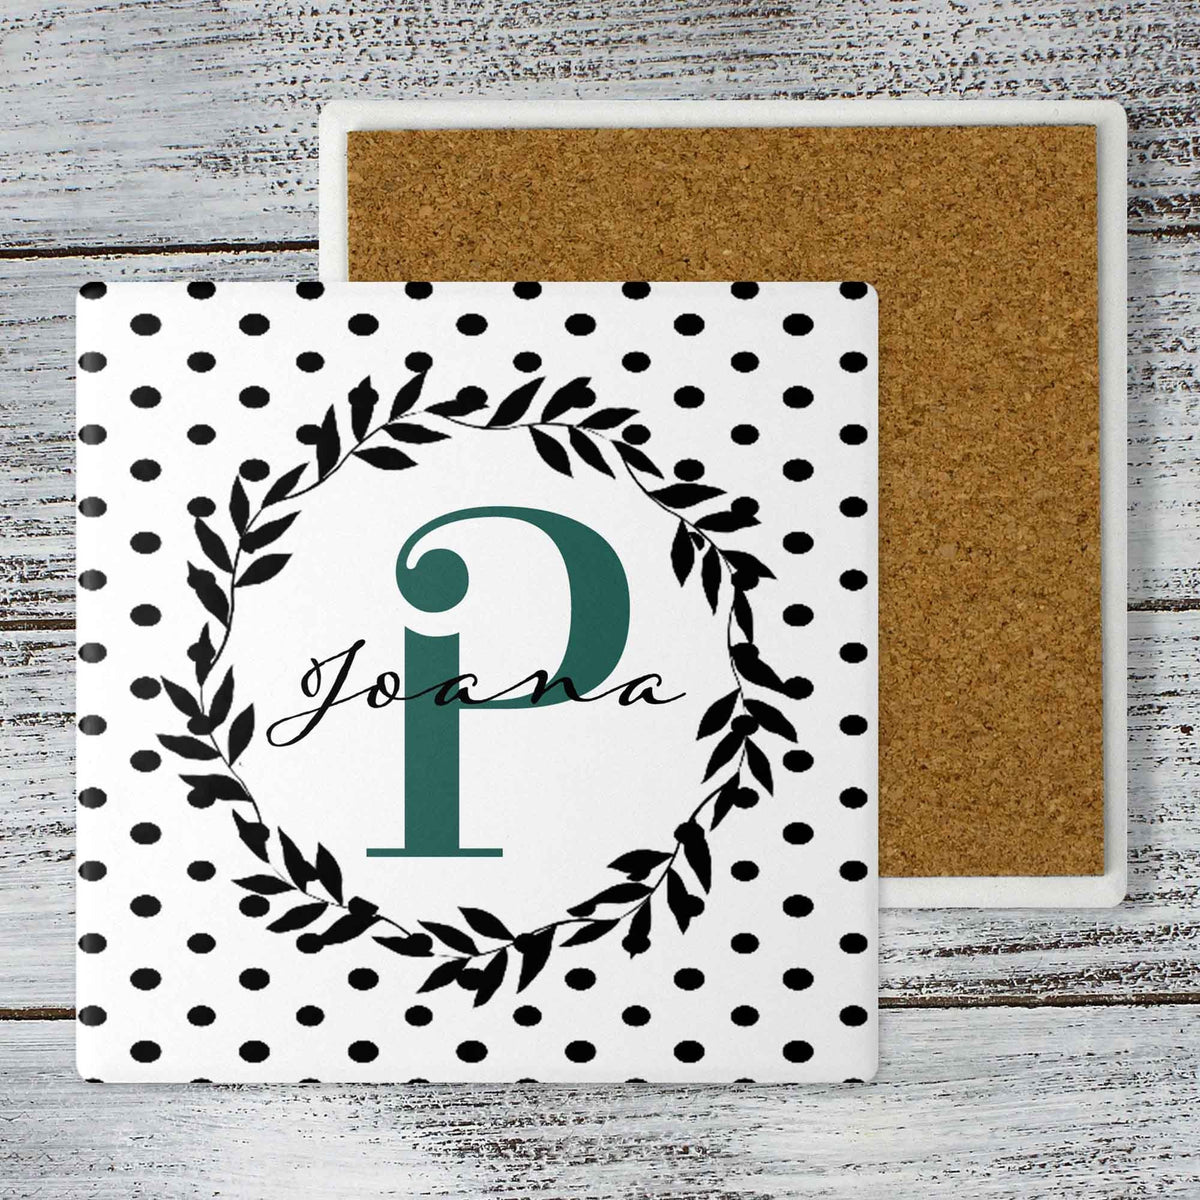 Personalized Coasters | Custom Stone Coaster Set | Polka Dot Wreath | Set of 4